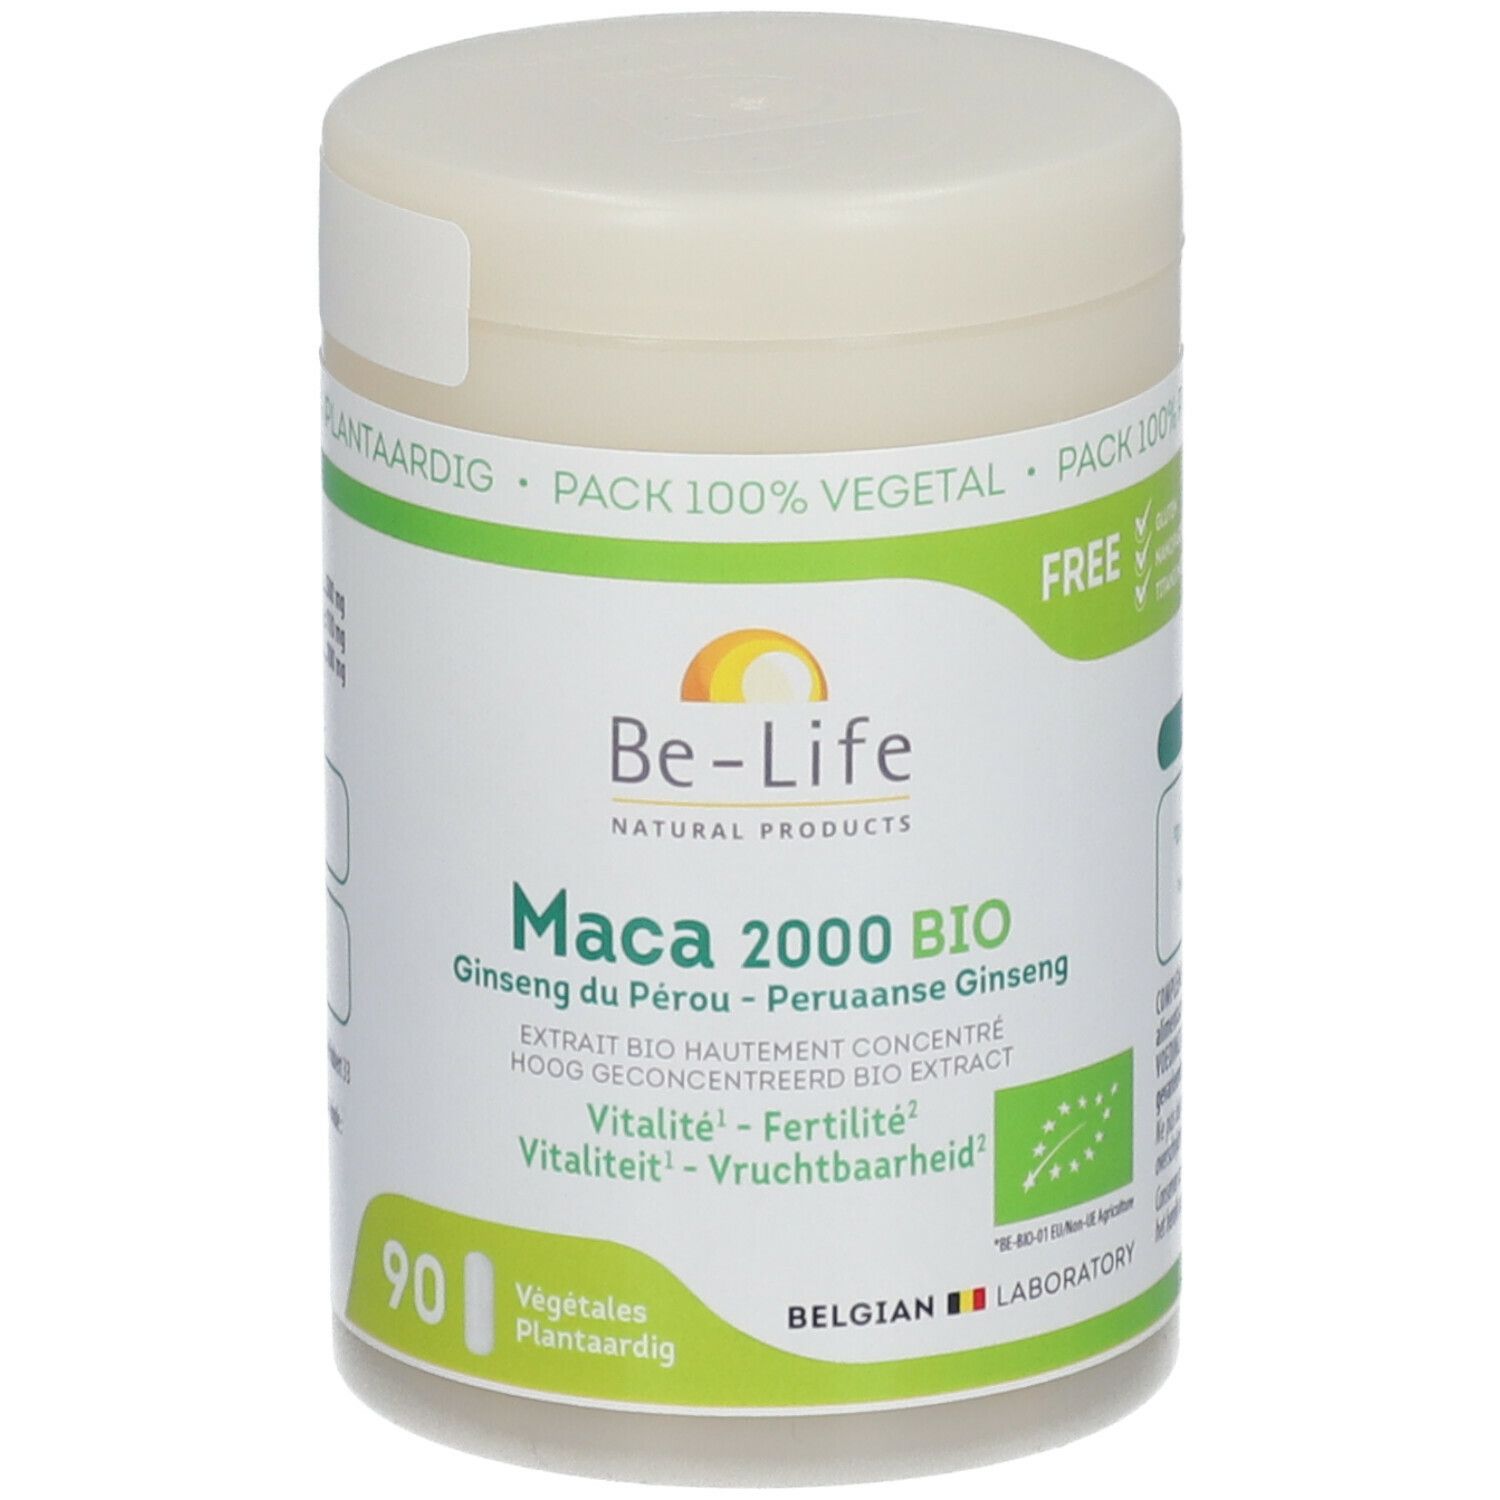 Be-Life Maca 2000